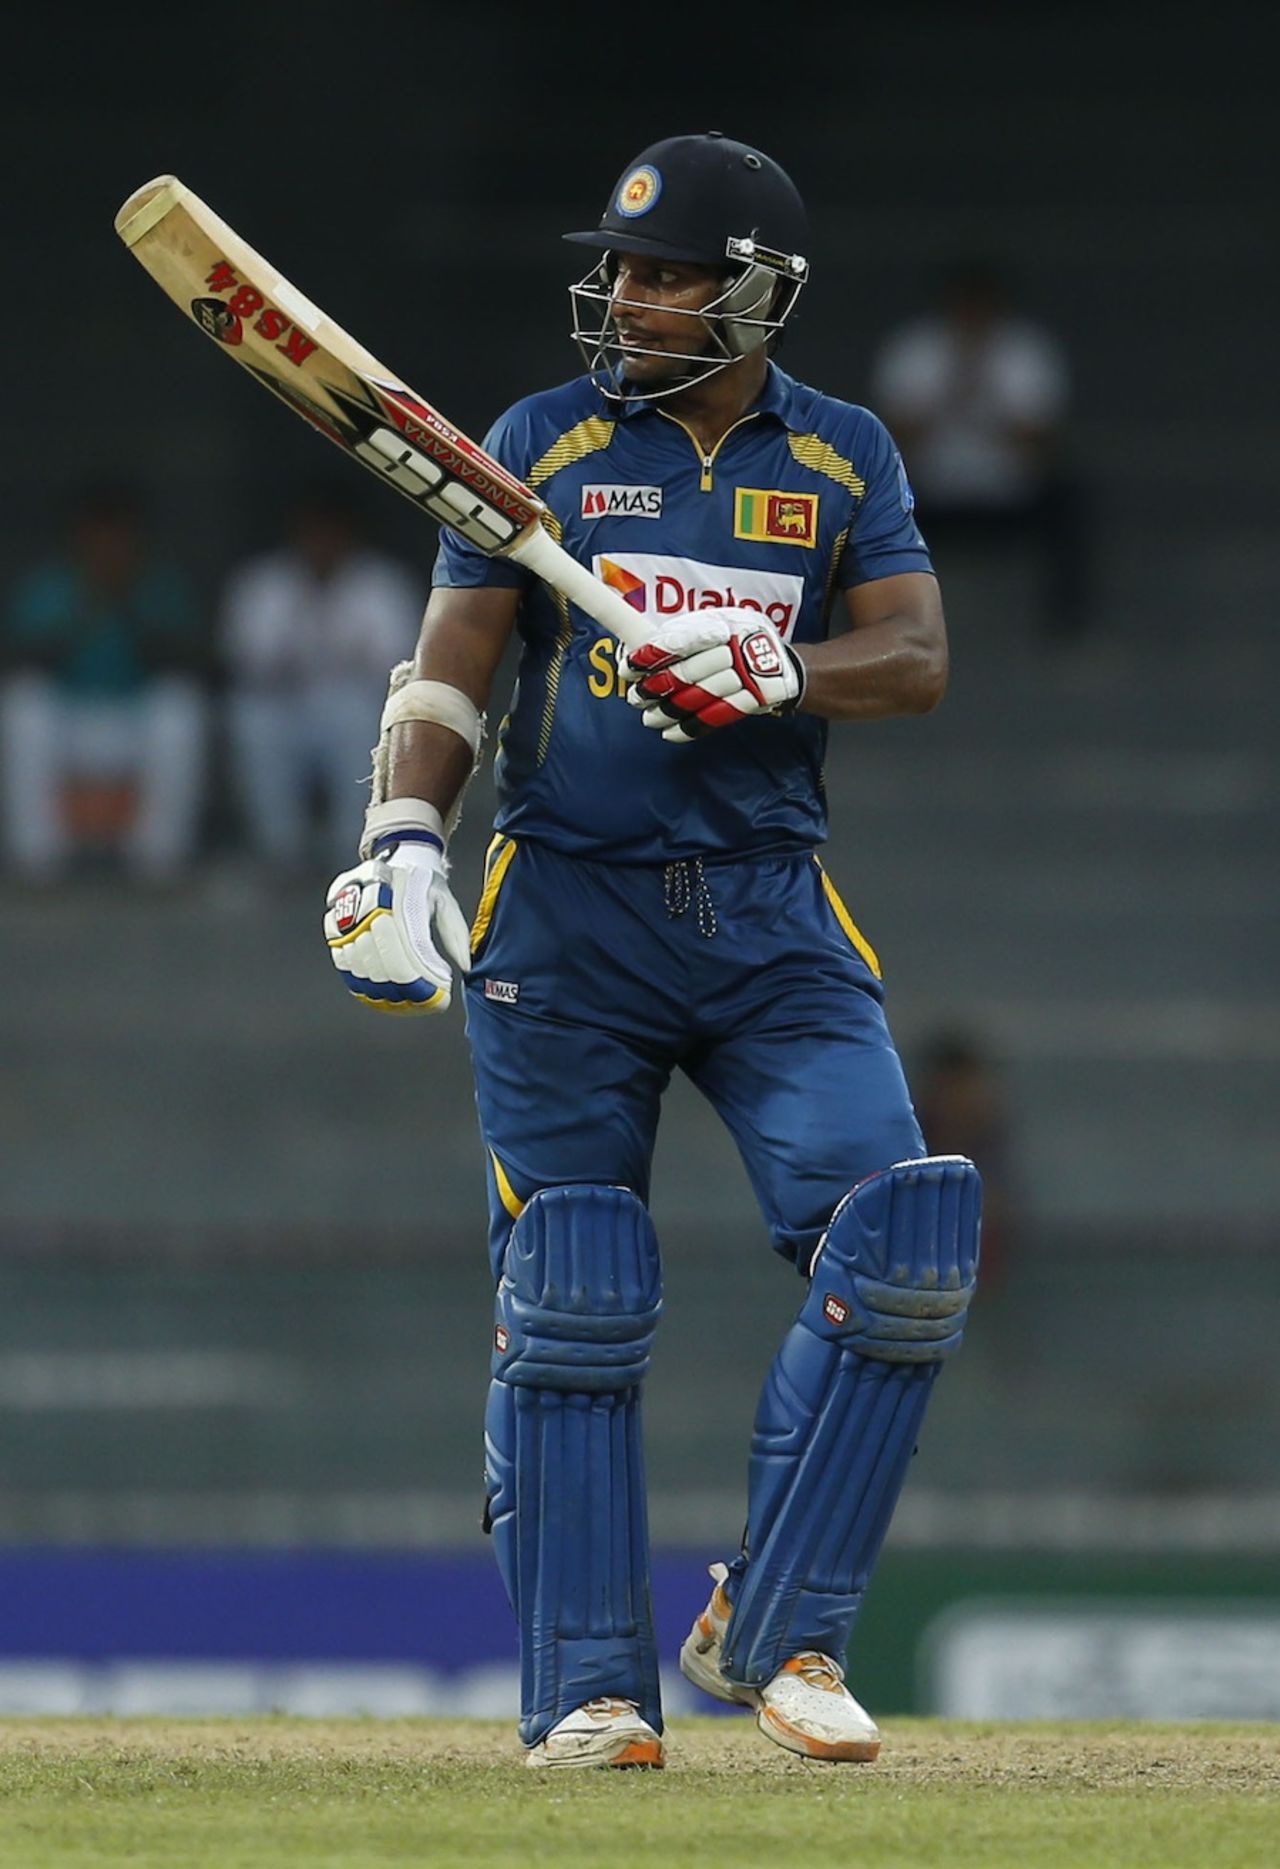 Kumar Sangakkara gestures after scoring 150, Sri Lanka v South Africa, 1st ODI, Colombo, July 20, 2013